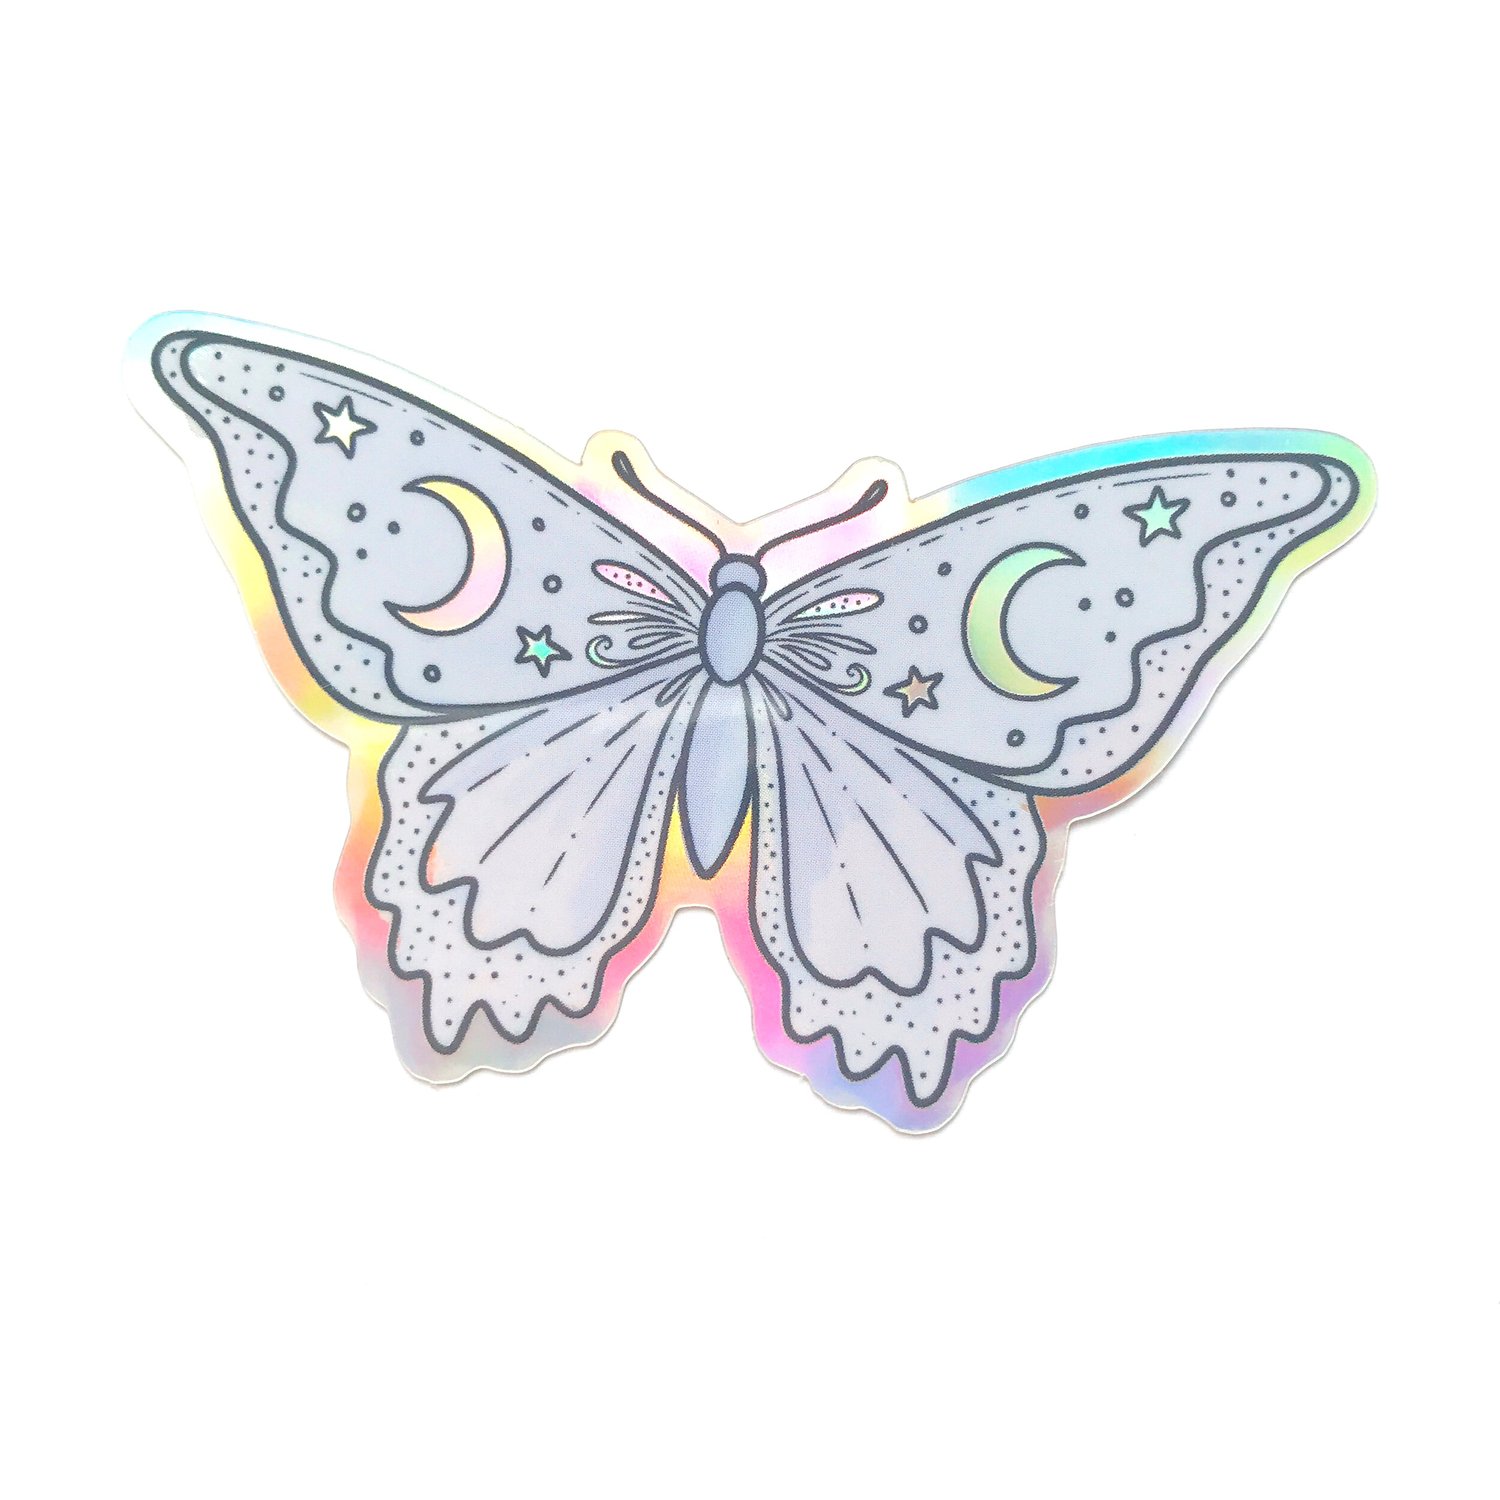 https://images.squarespace-cdn.com/content/v1/554a945ae4b01b8e18be0447/1668990823363-5JEJNBT4NXHV5YO2XX5B/holographic-butterfly.jpg?format=1500w